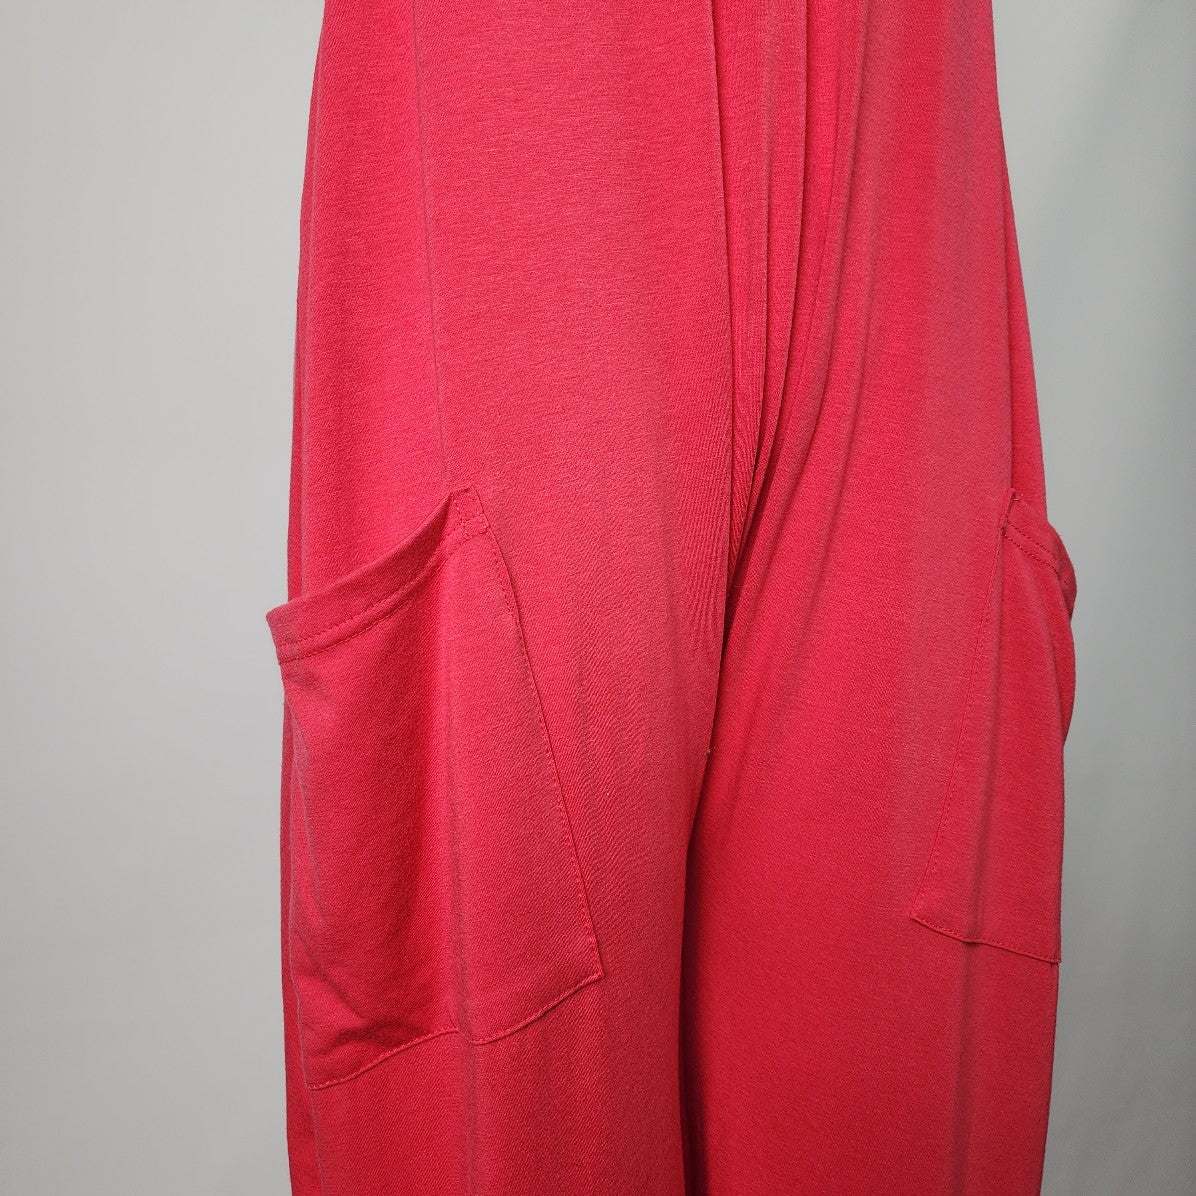 Coral Jersey Knit Overalls Jumpsuit Size L/XL